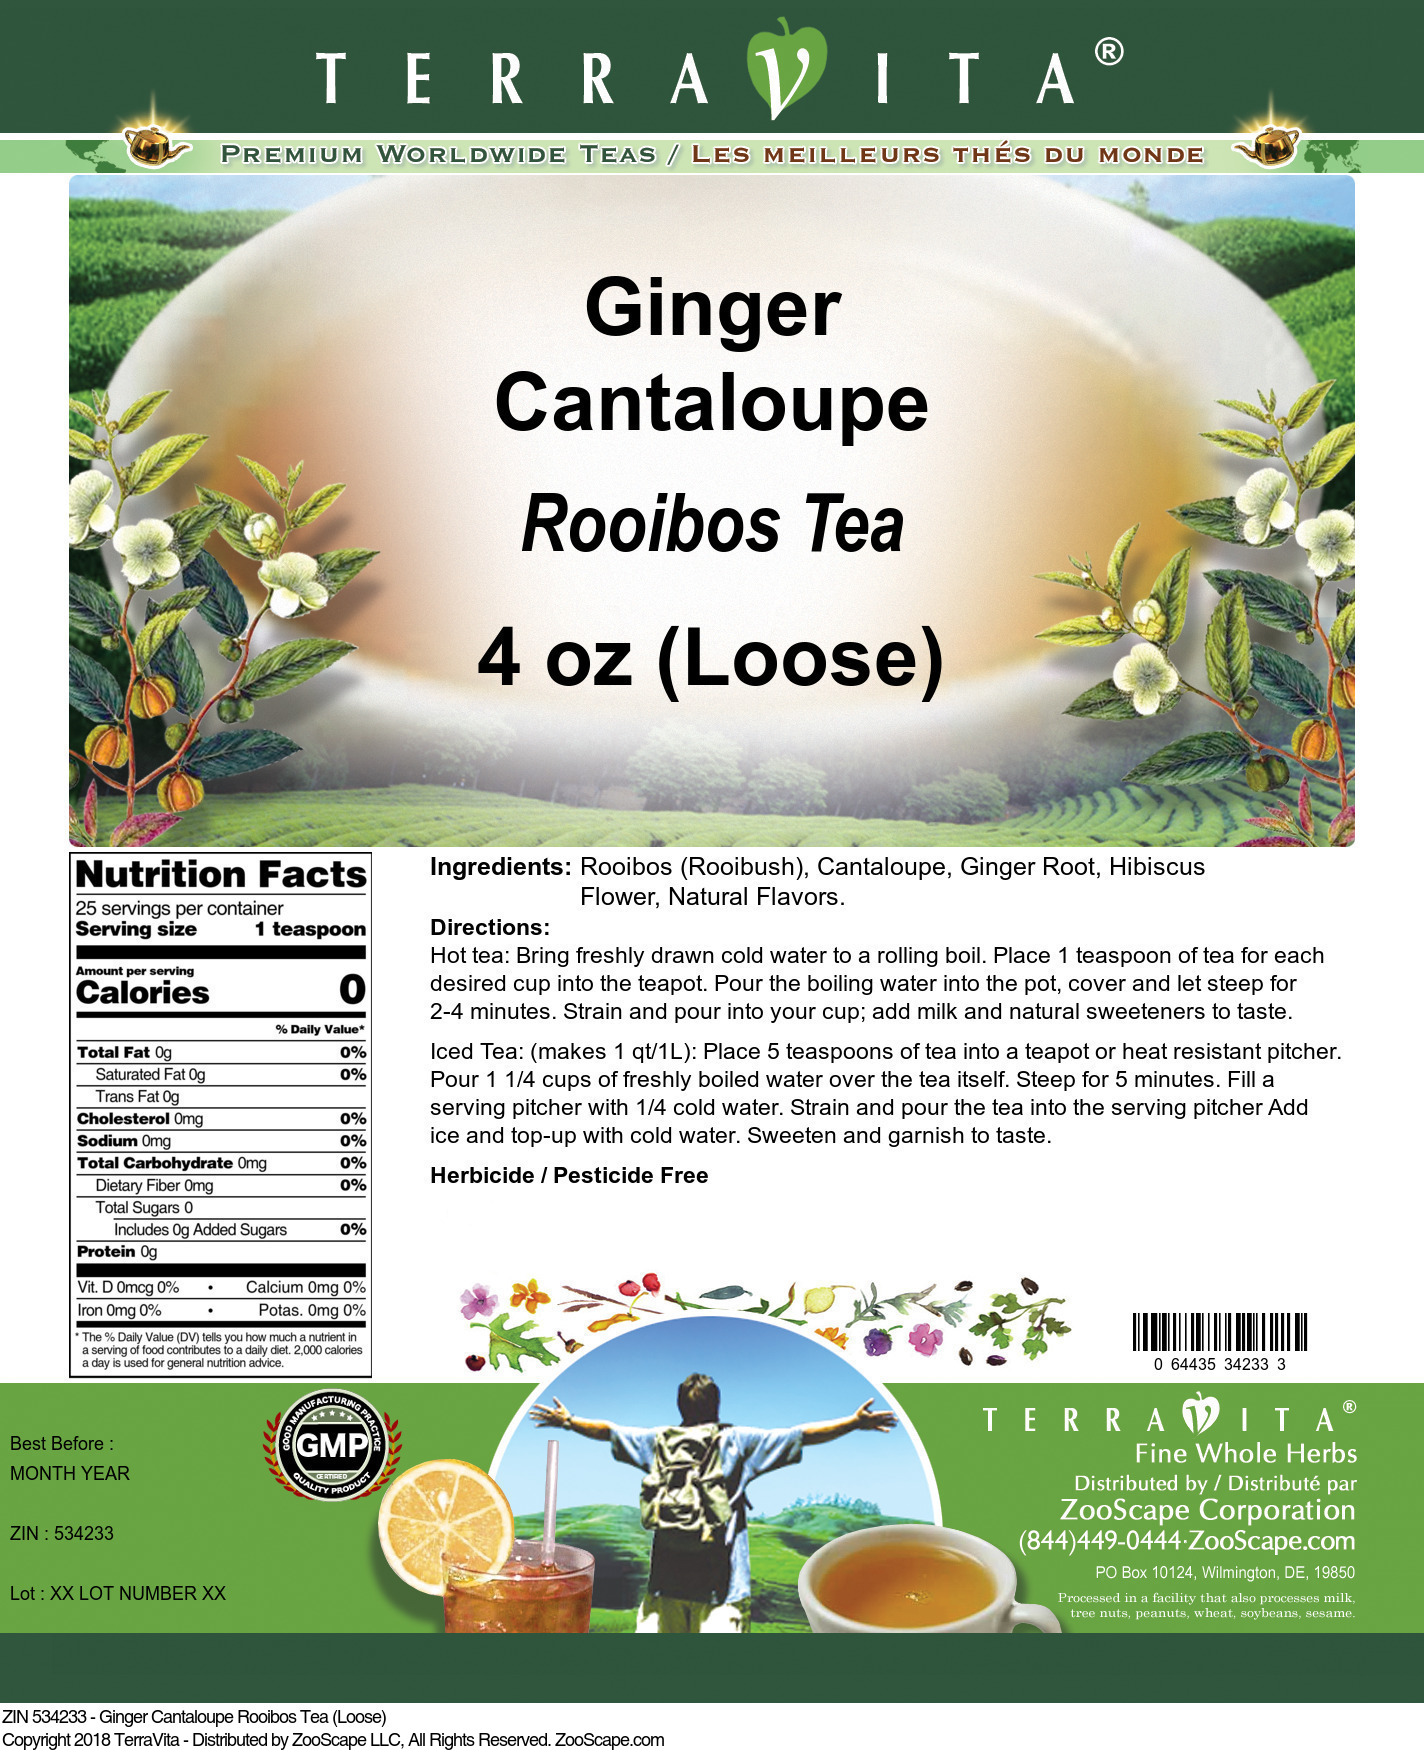 Ginger Cantaloupe Rooibos Tea (Loose) - Label